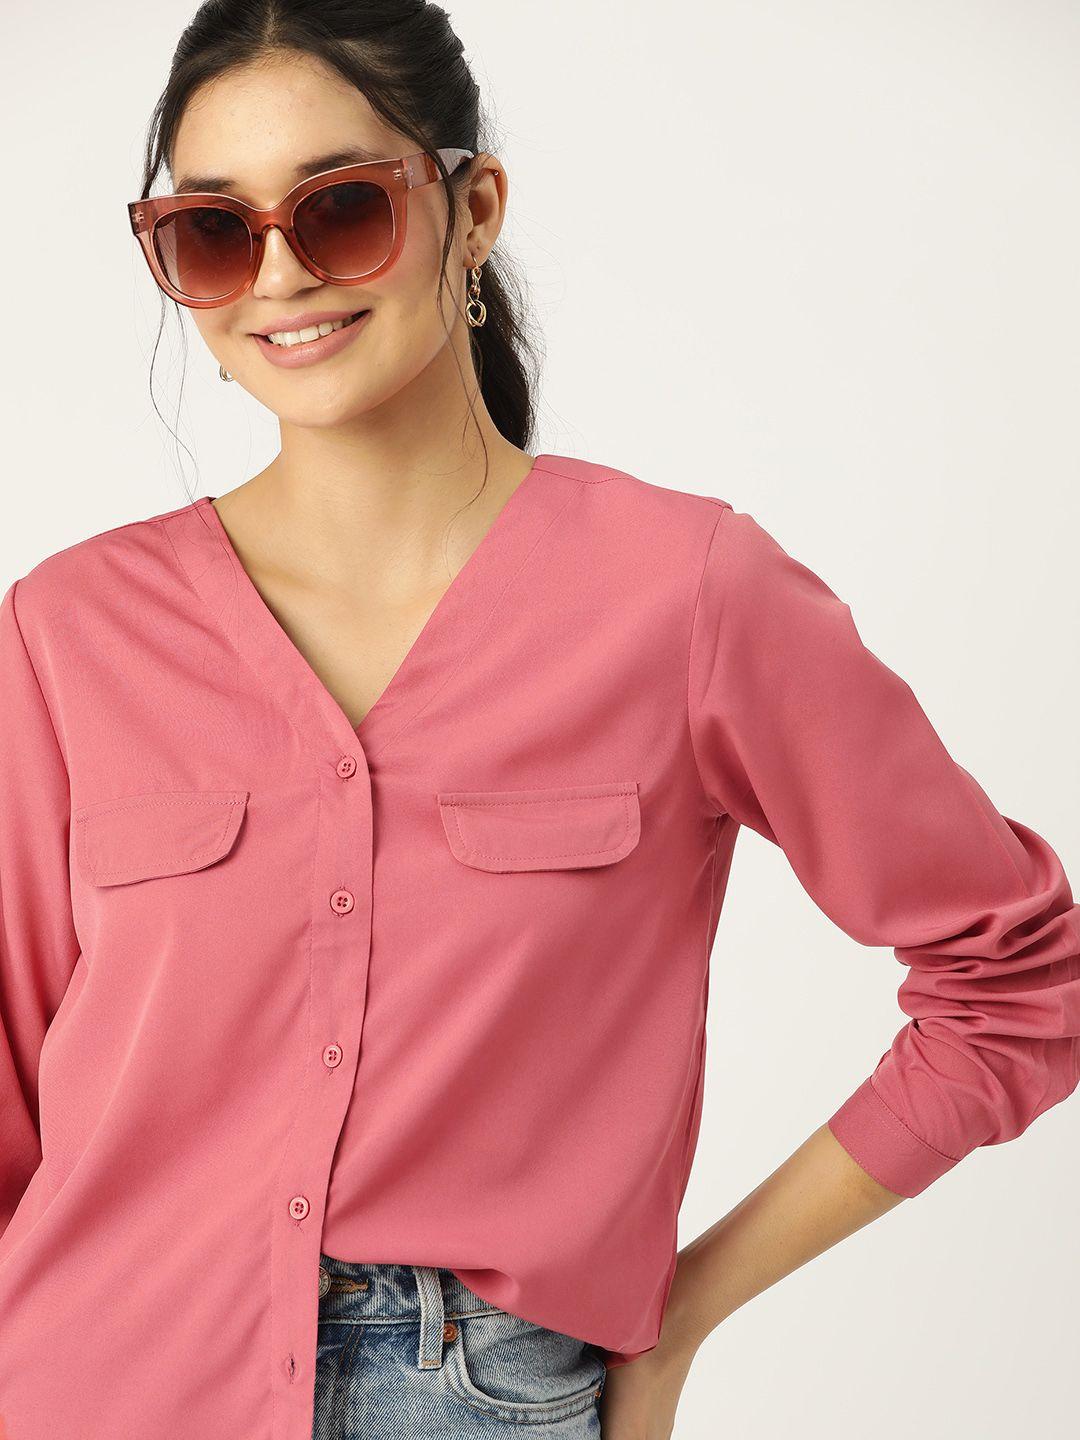 dressberry women solid comfort opaque casual shirt